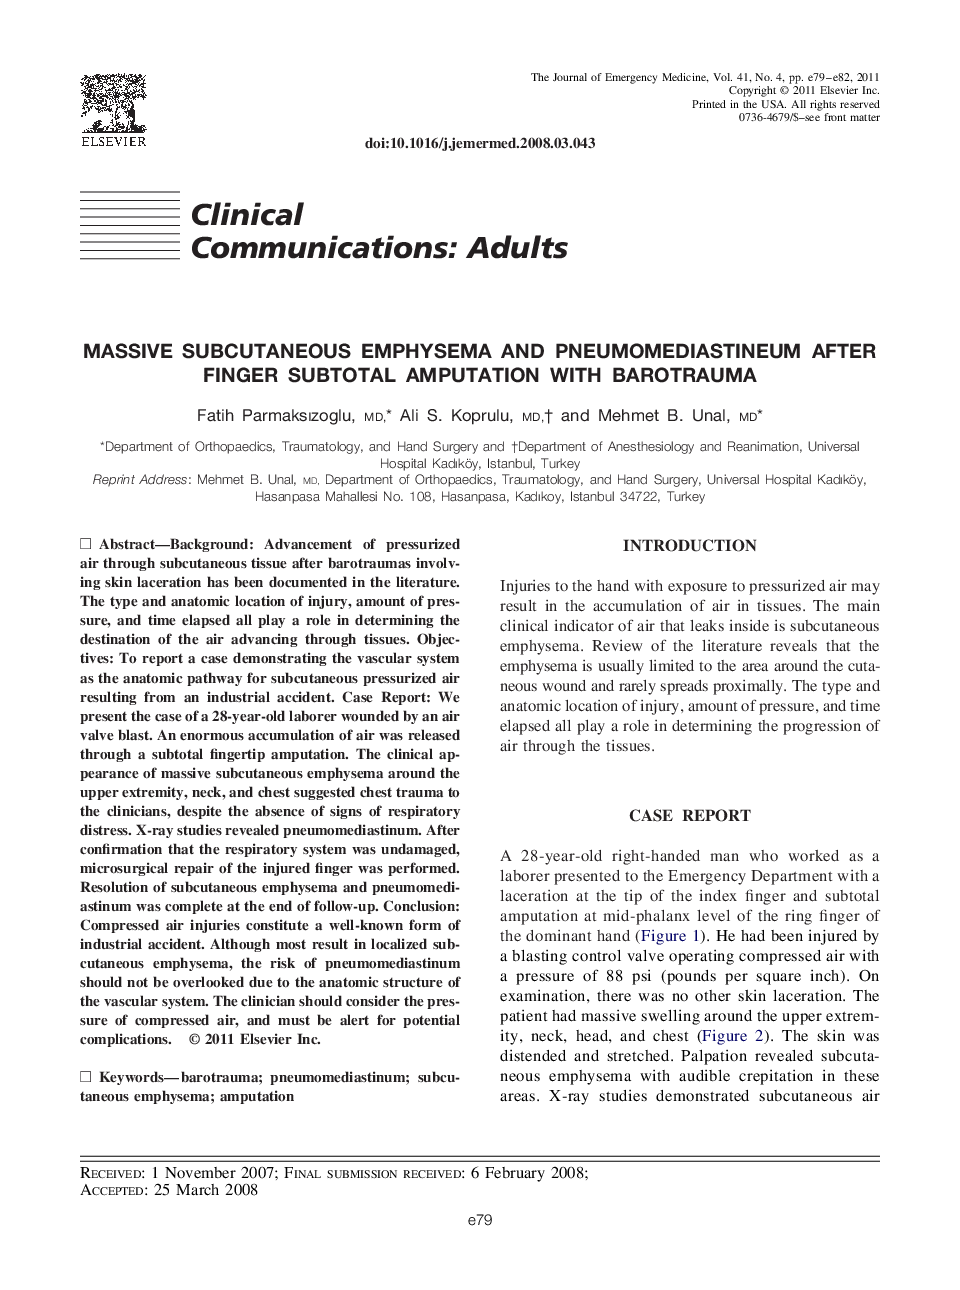 Massive Subcutaneous Emphysema and Pneumomediastineum After Finger Subtotal Amputation with Barotrauma